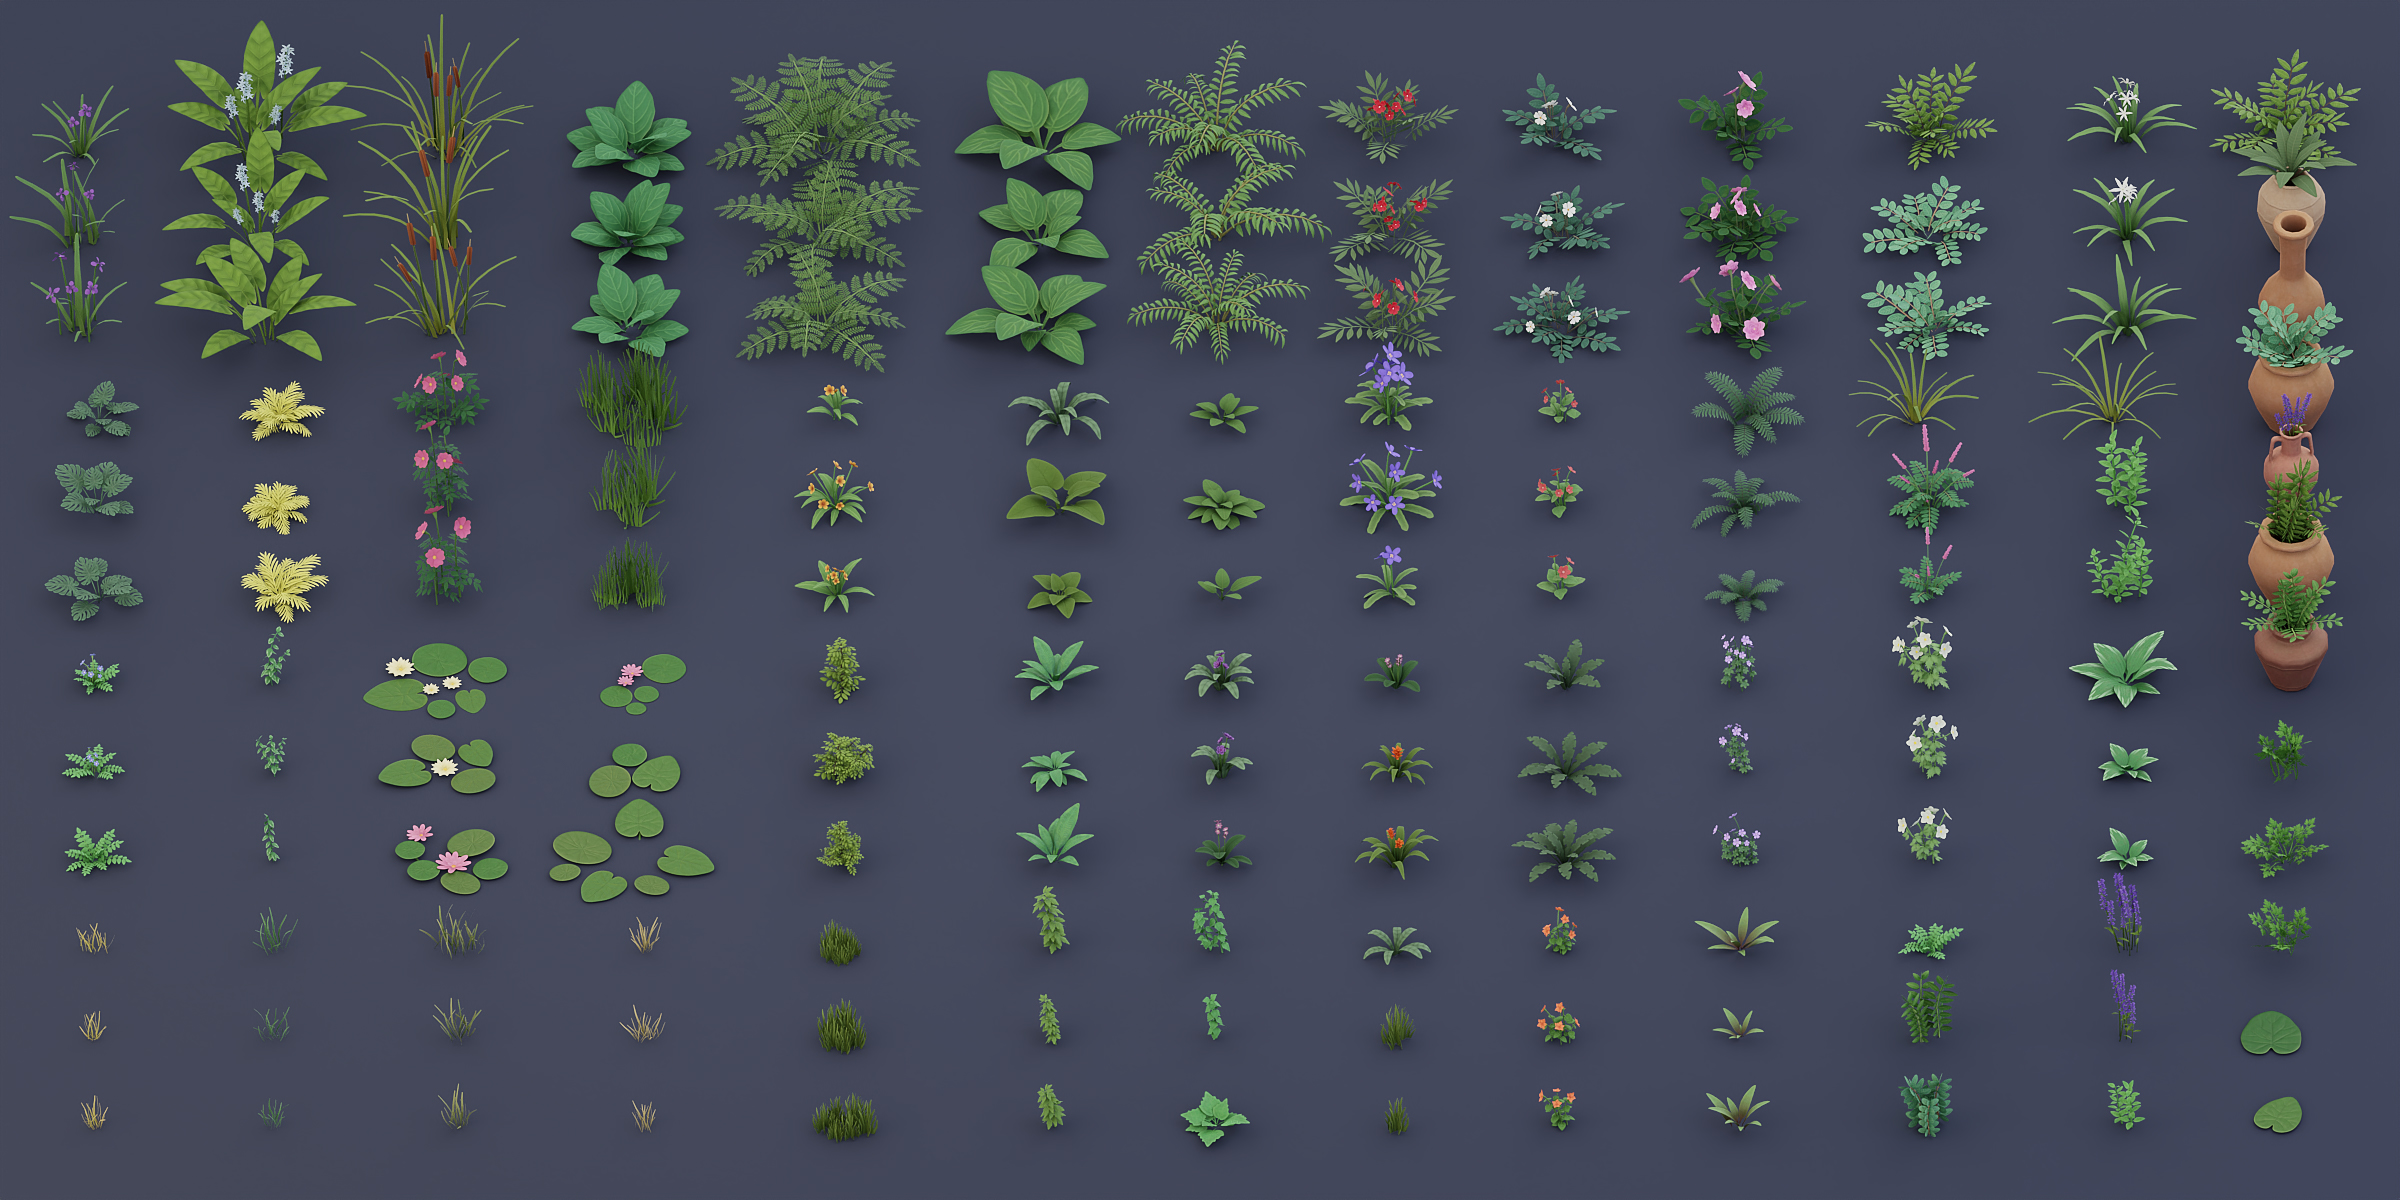 Cratial 3D - Stylized Foliage and Vegetation Assets